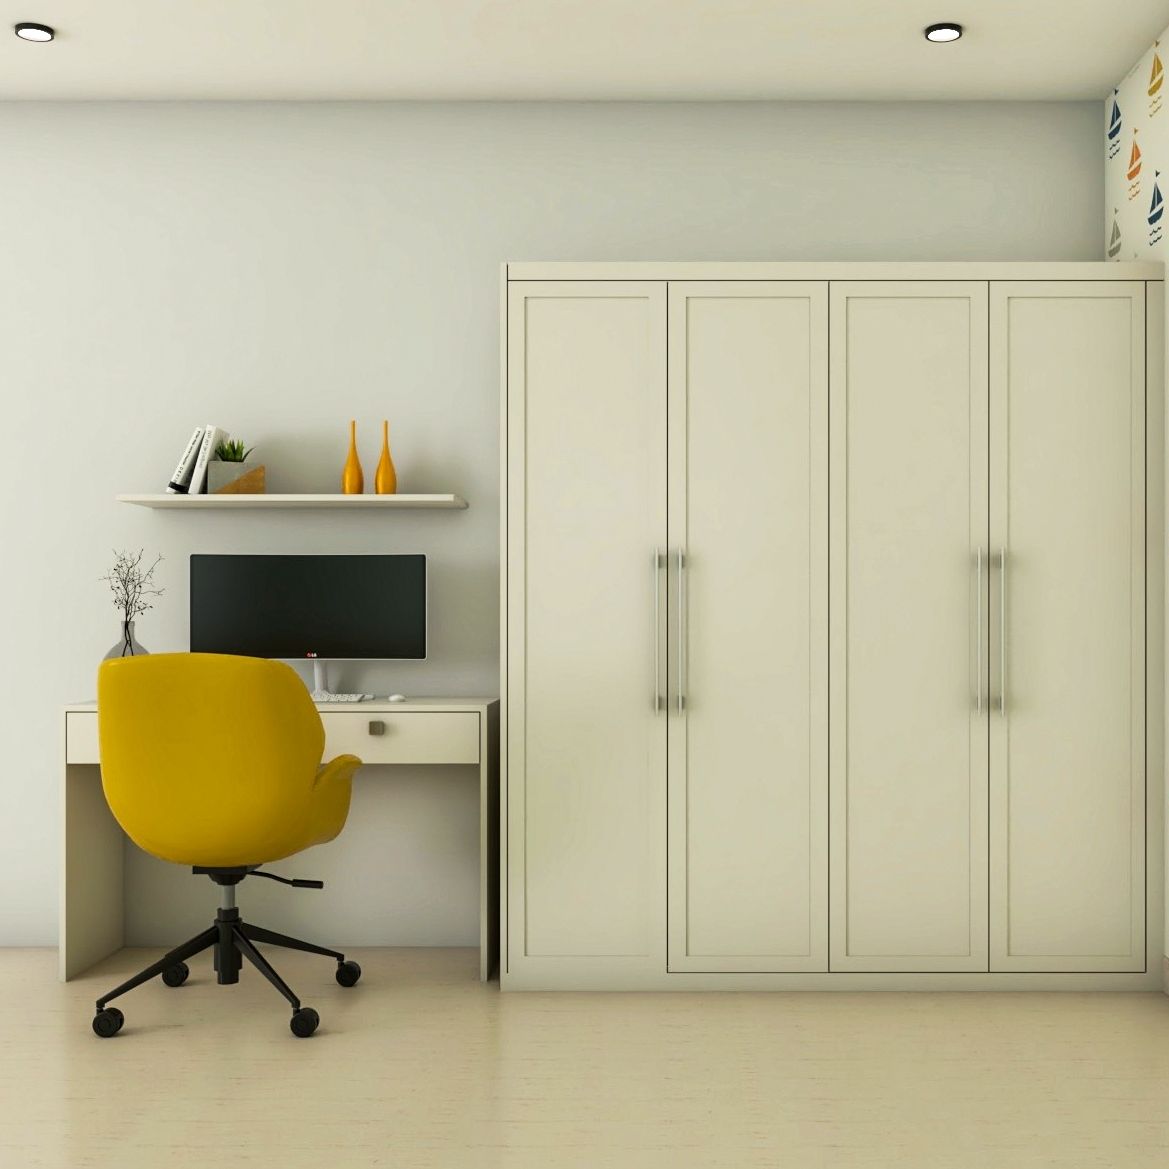 Minimalistic Home Office Interior Design With Beige 4-Door Wardrobe